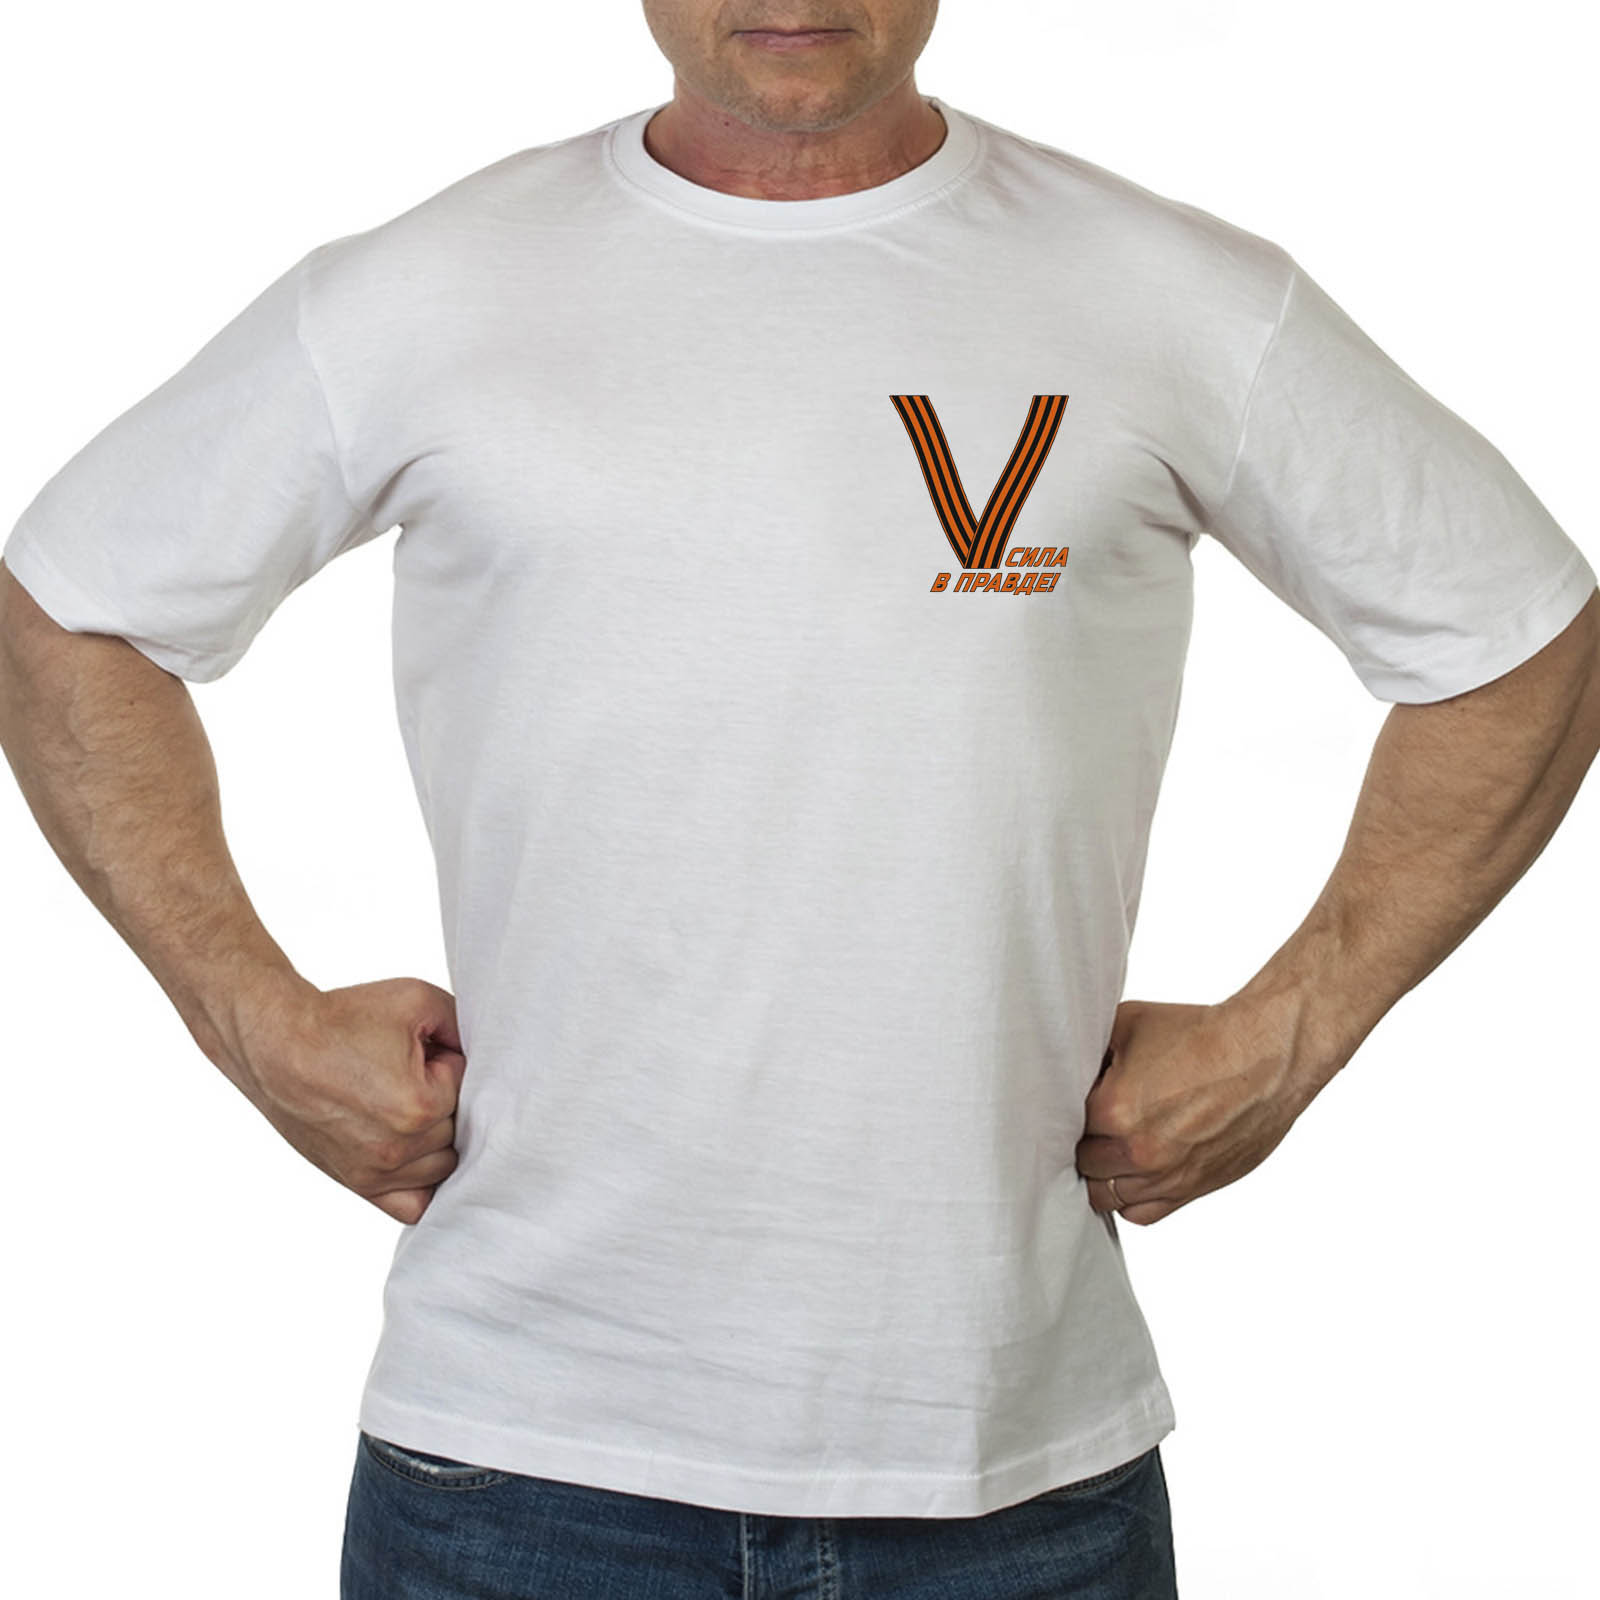 Хлопковая мужская футболка со знаком V